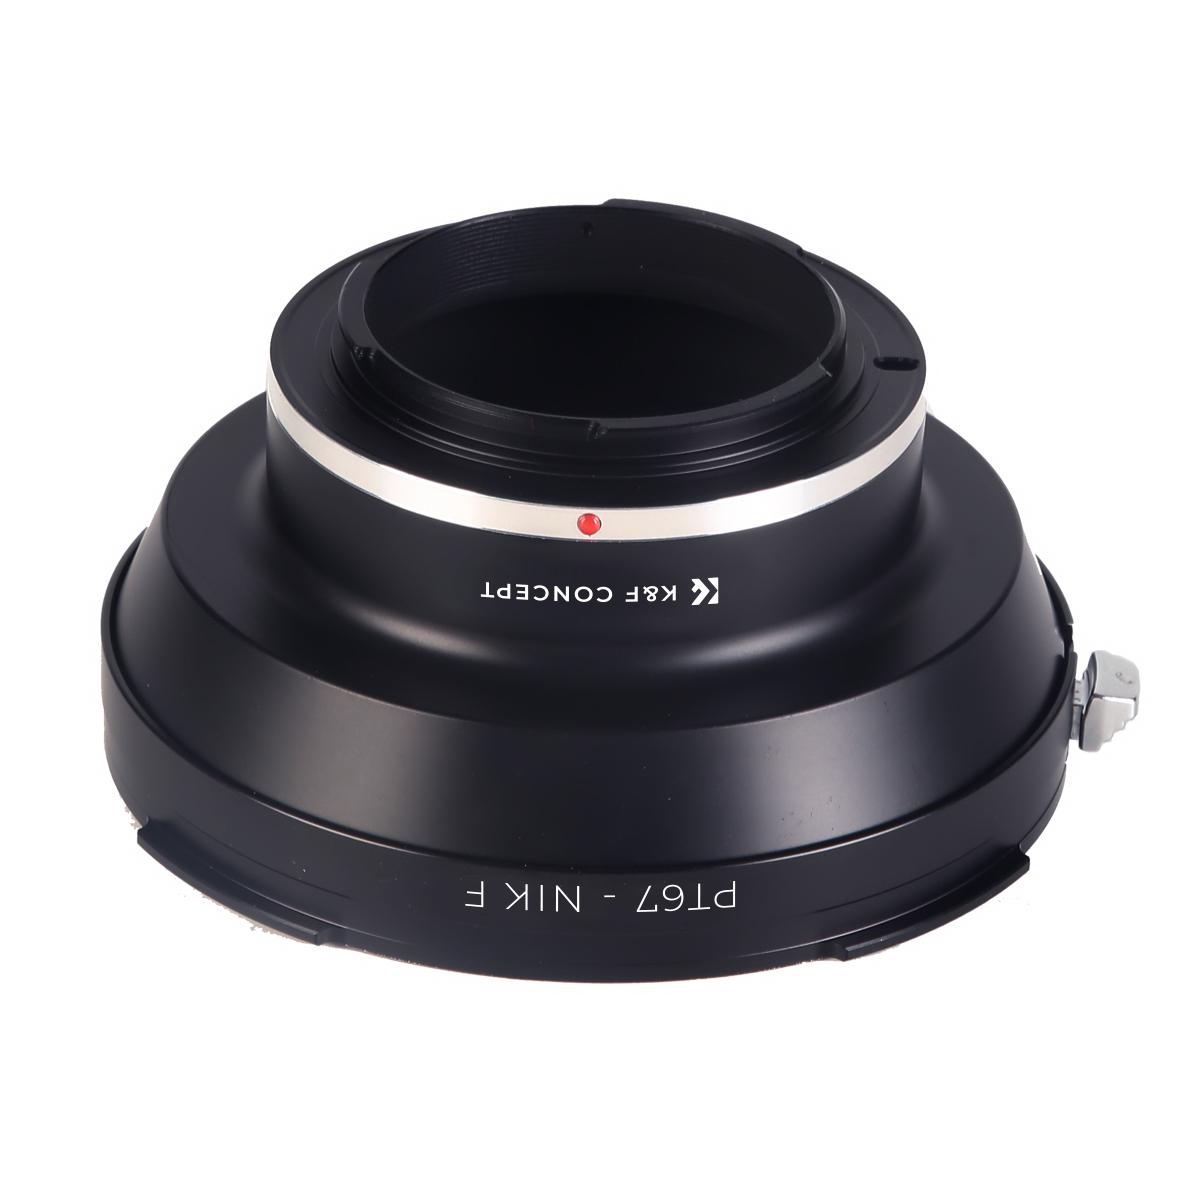 Pentax 67 Lenses to Nikon Camera Mount Adapter with tripod mount